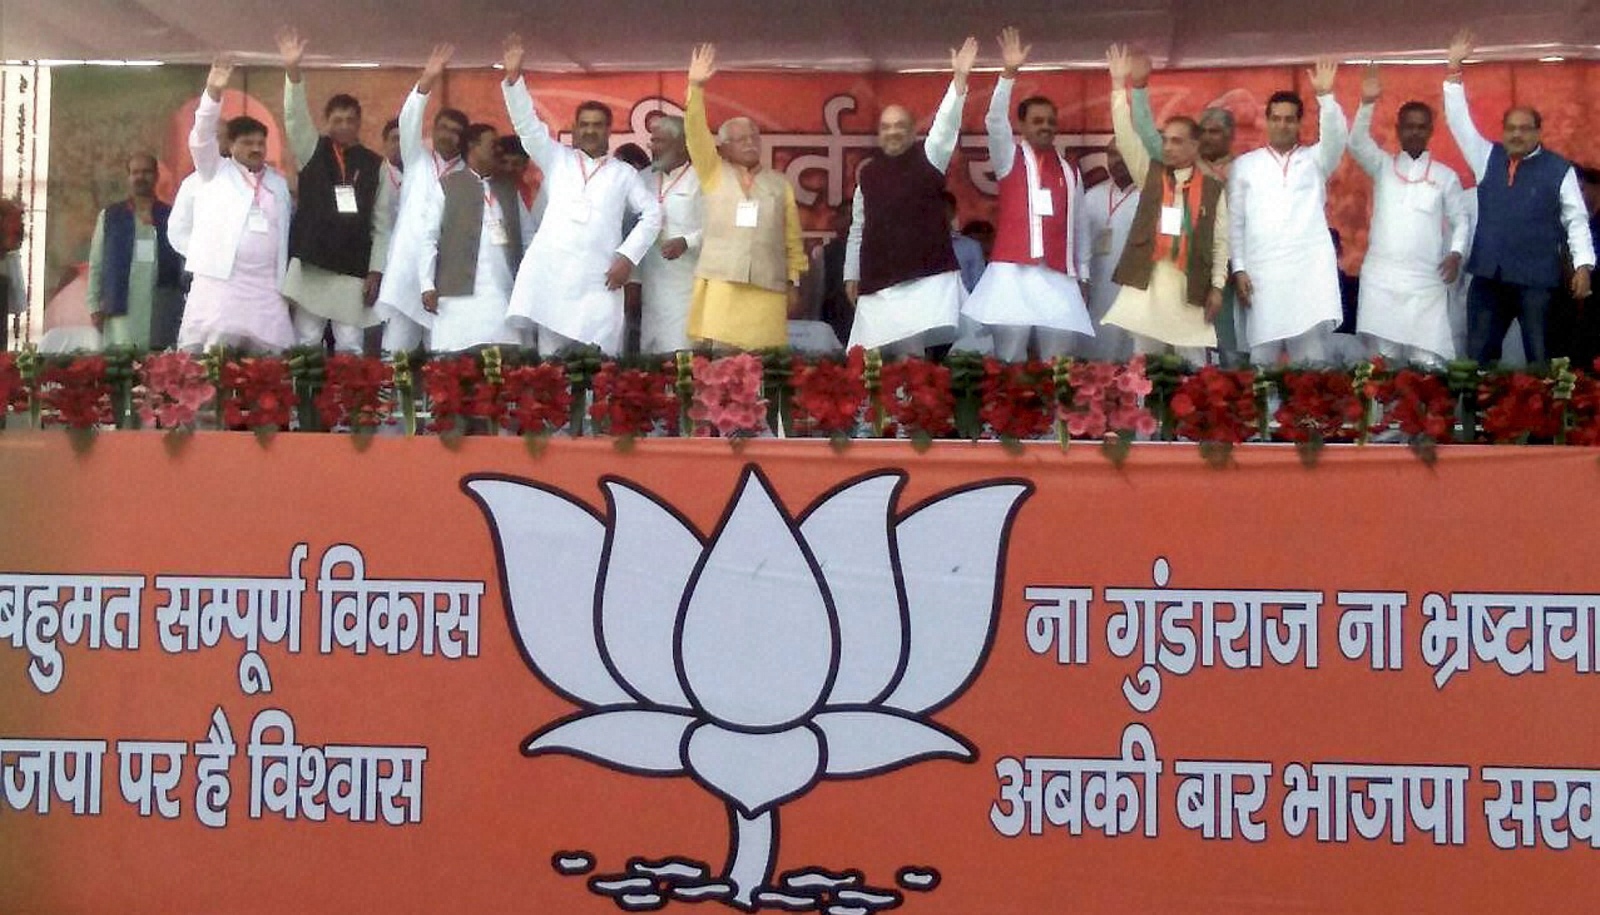 UP poll: BJP jingles to focus SP 'goondraaj', BSP 'corruption'